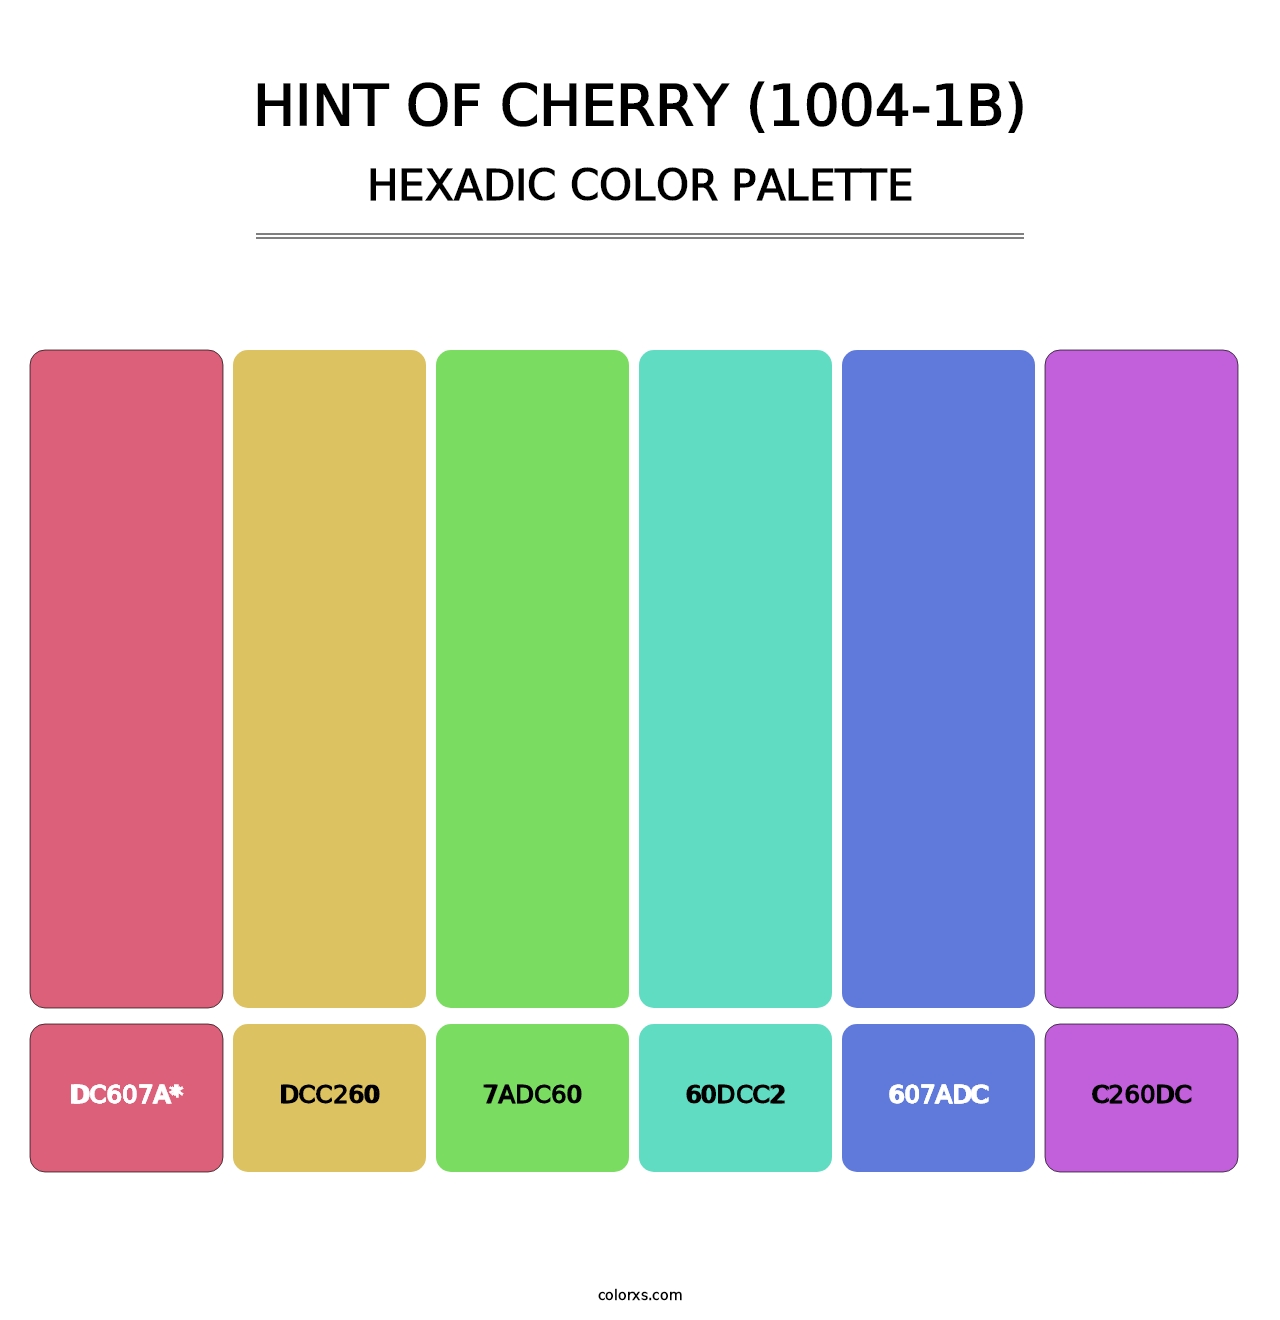 Hint of Cherry (1004-1B) - Hexadic Color Palette